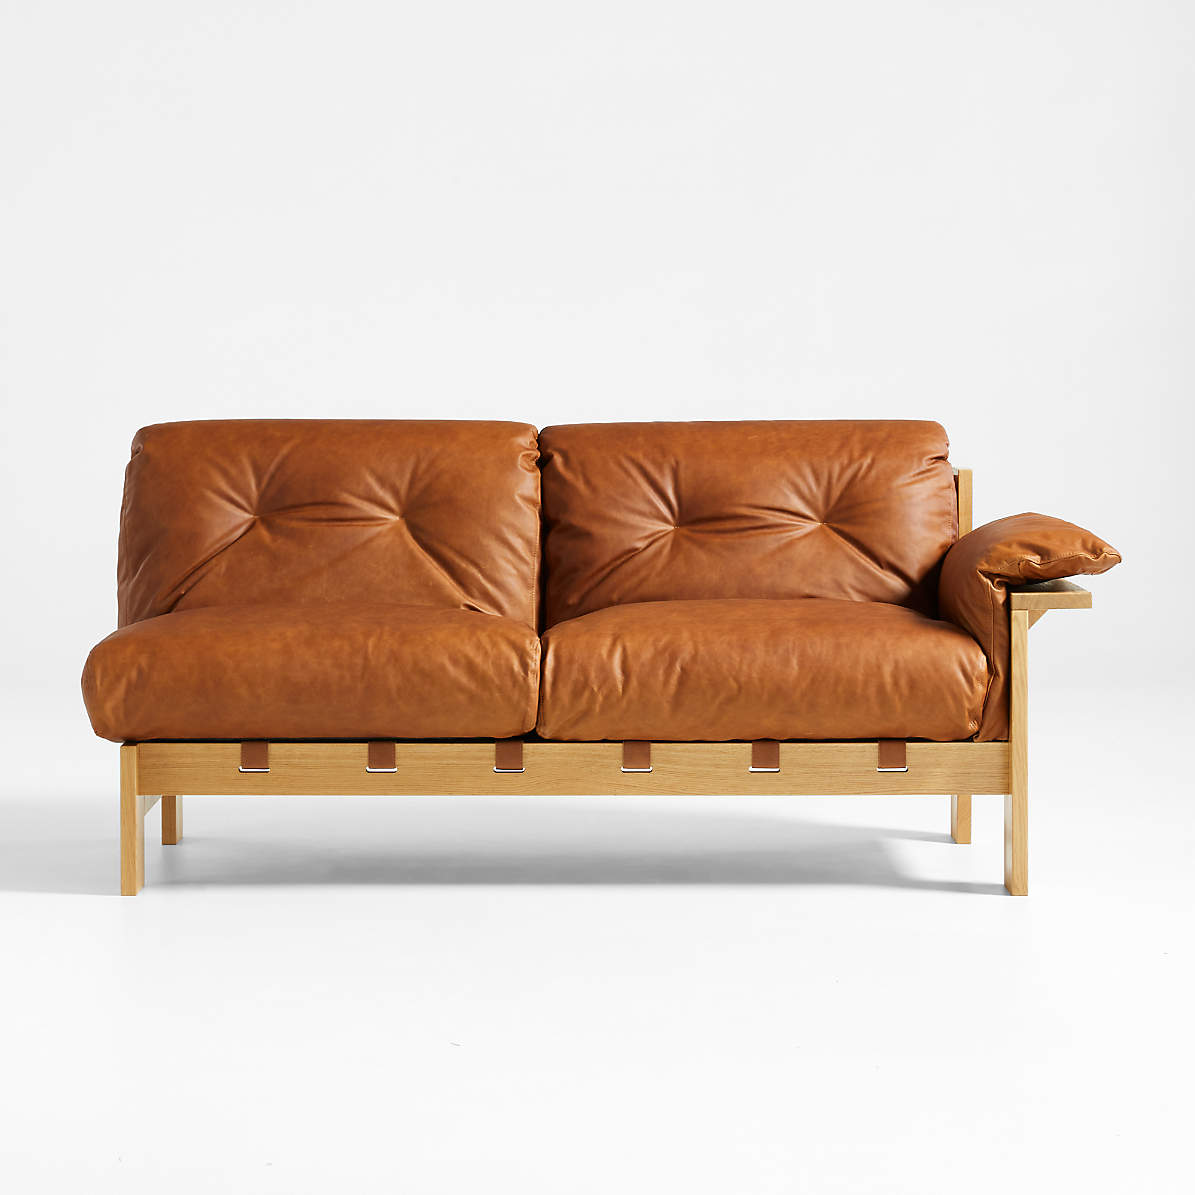 Shinola Runwell Wood Frame Right Arm, Wood And Leather Furniture